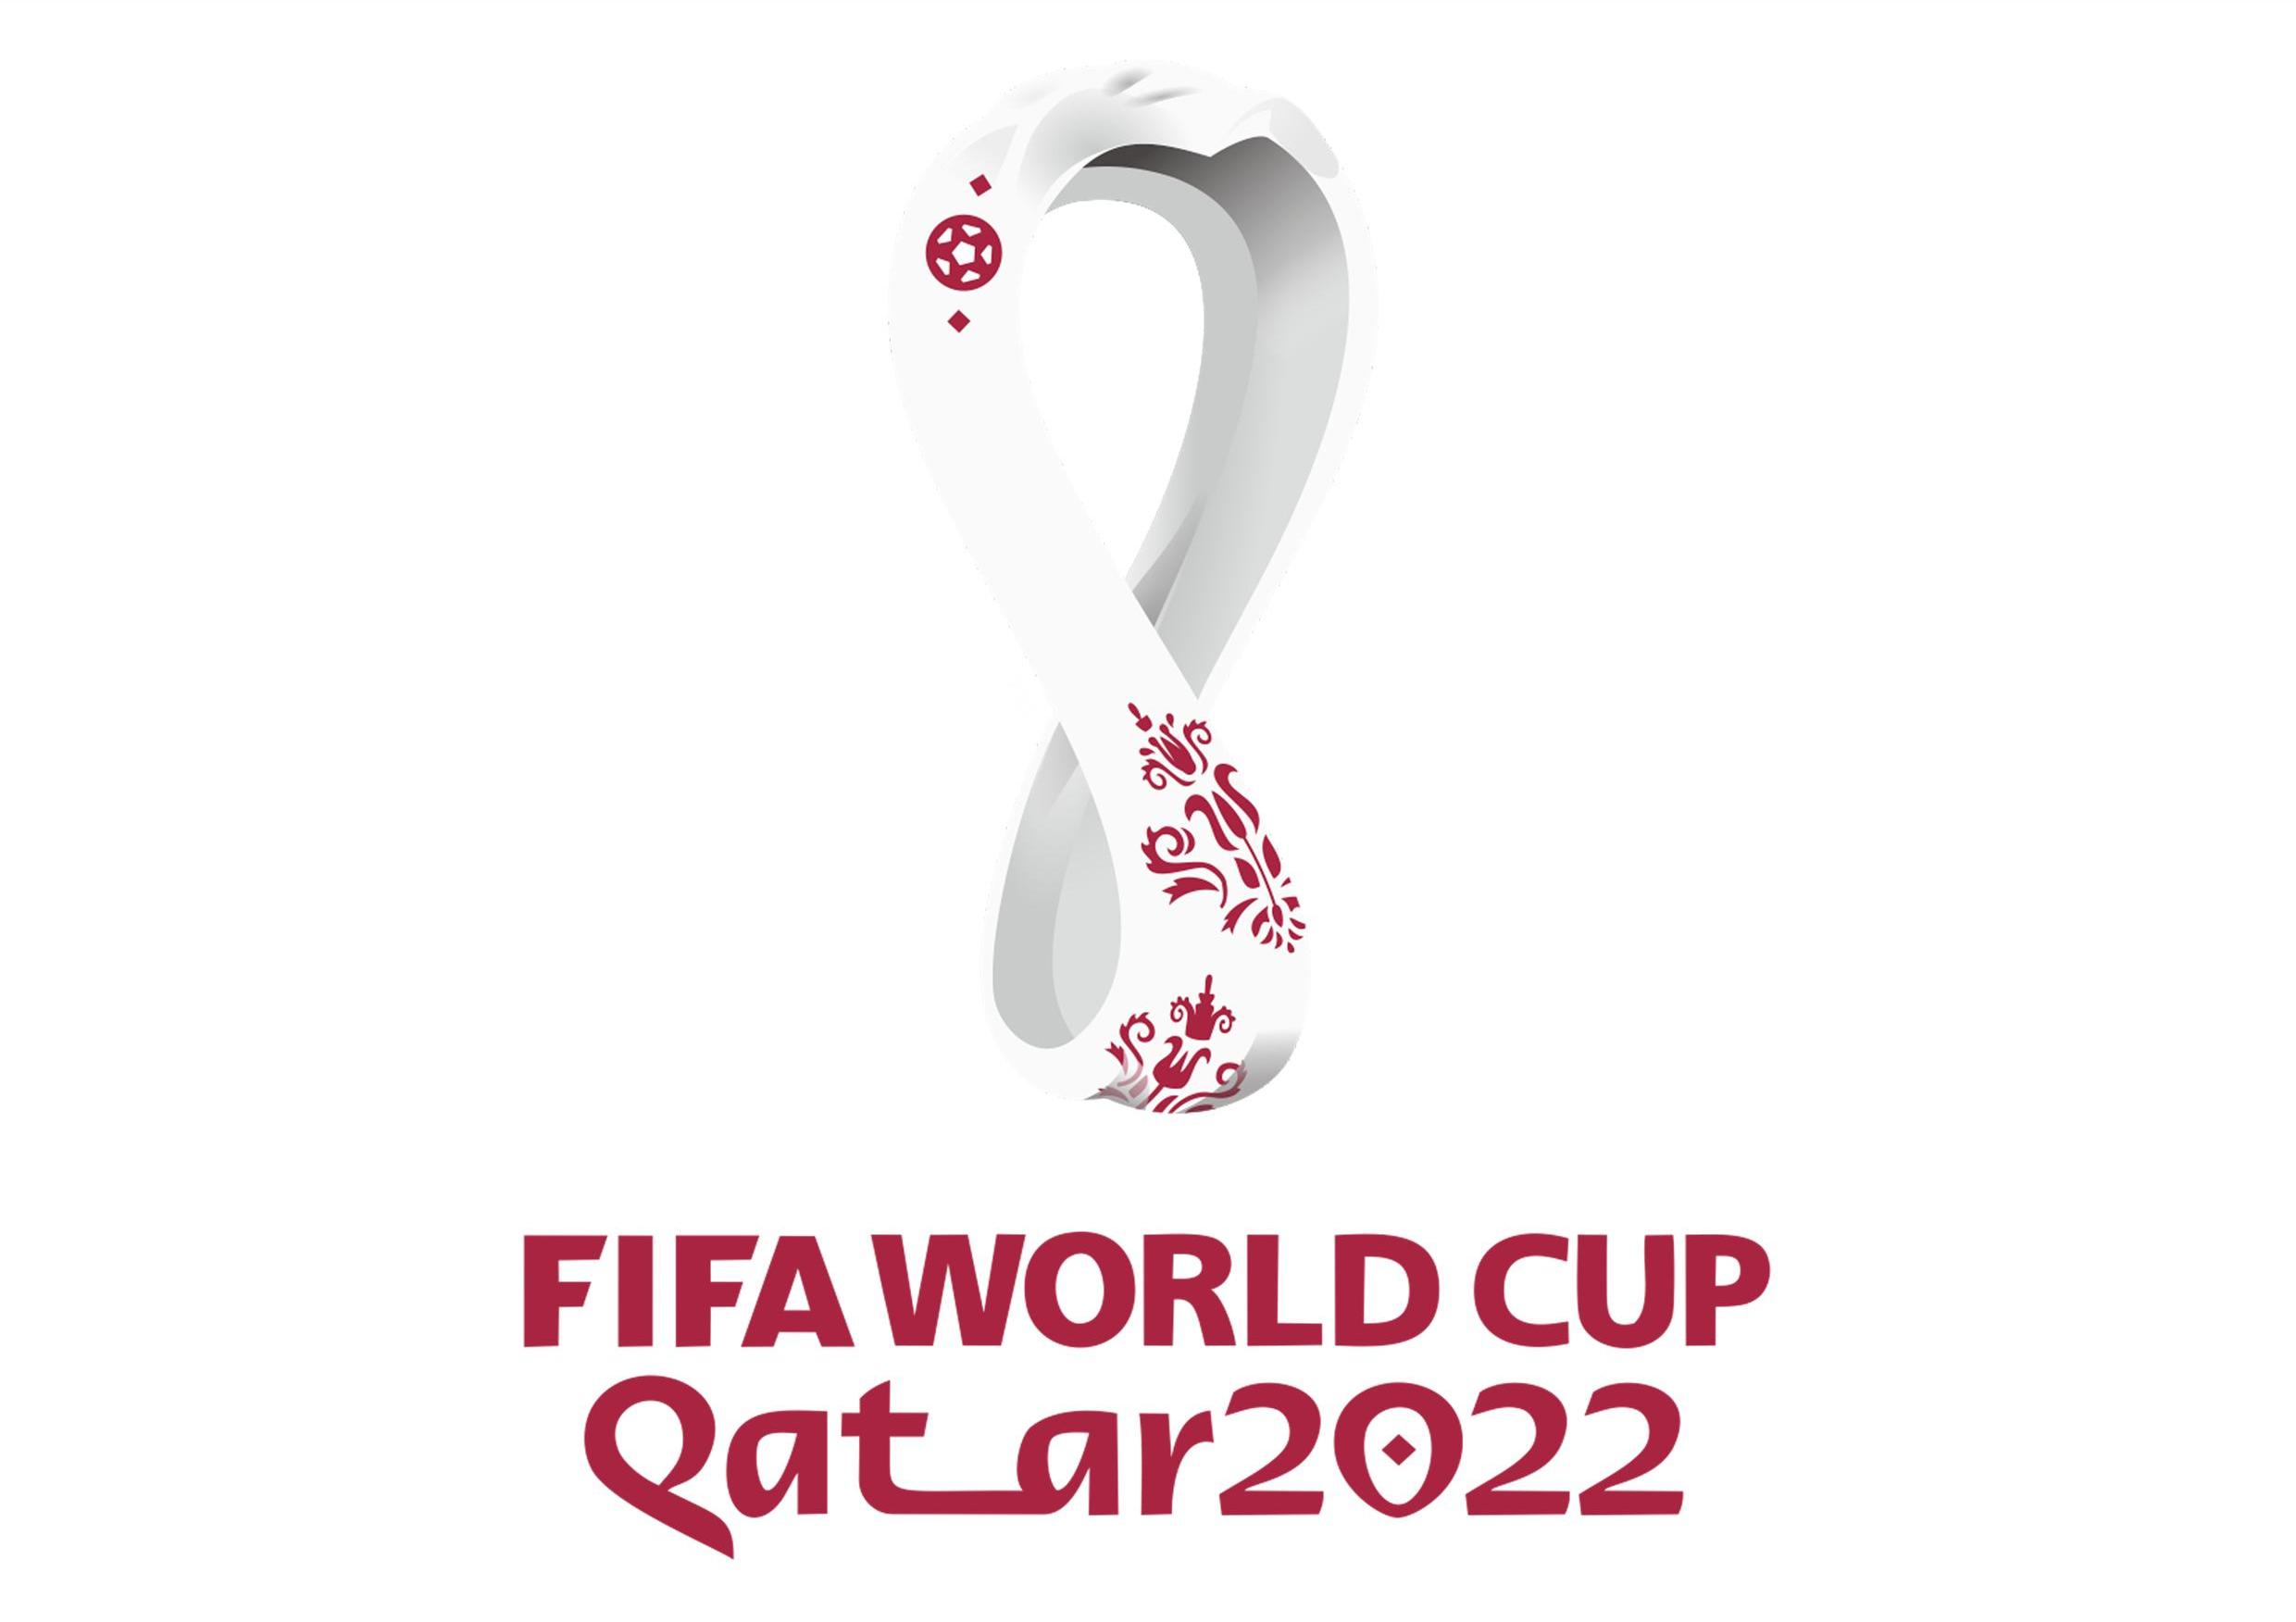 Jadwal Piala Dunia 2022: Jumat 2 Desember 2022, Korea Selatan vs Portugal Kick Off 22.00 WIB